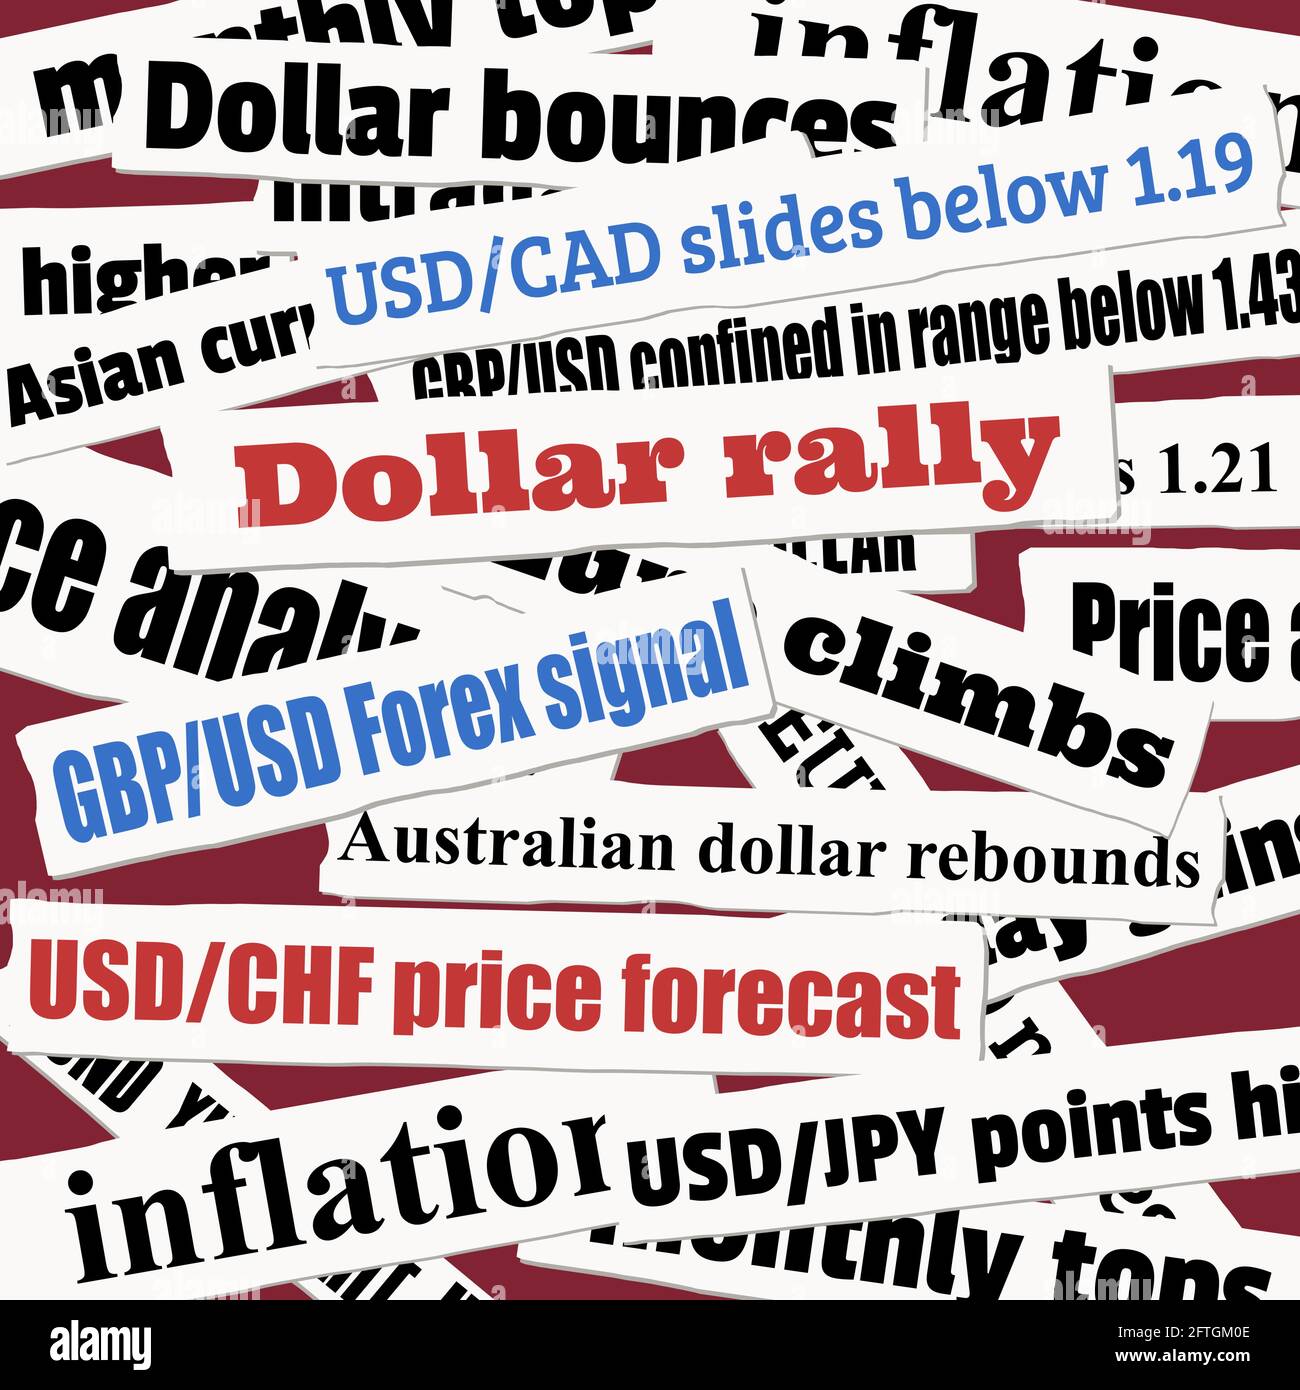 Forex news currency market new no deposit bonus in forex